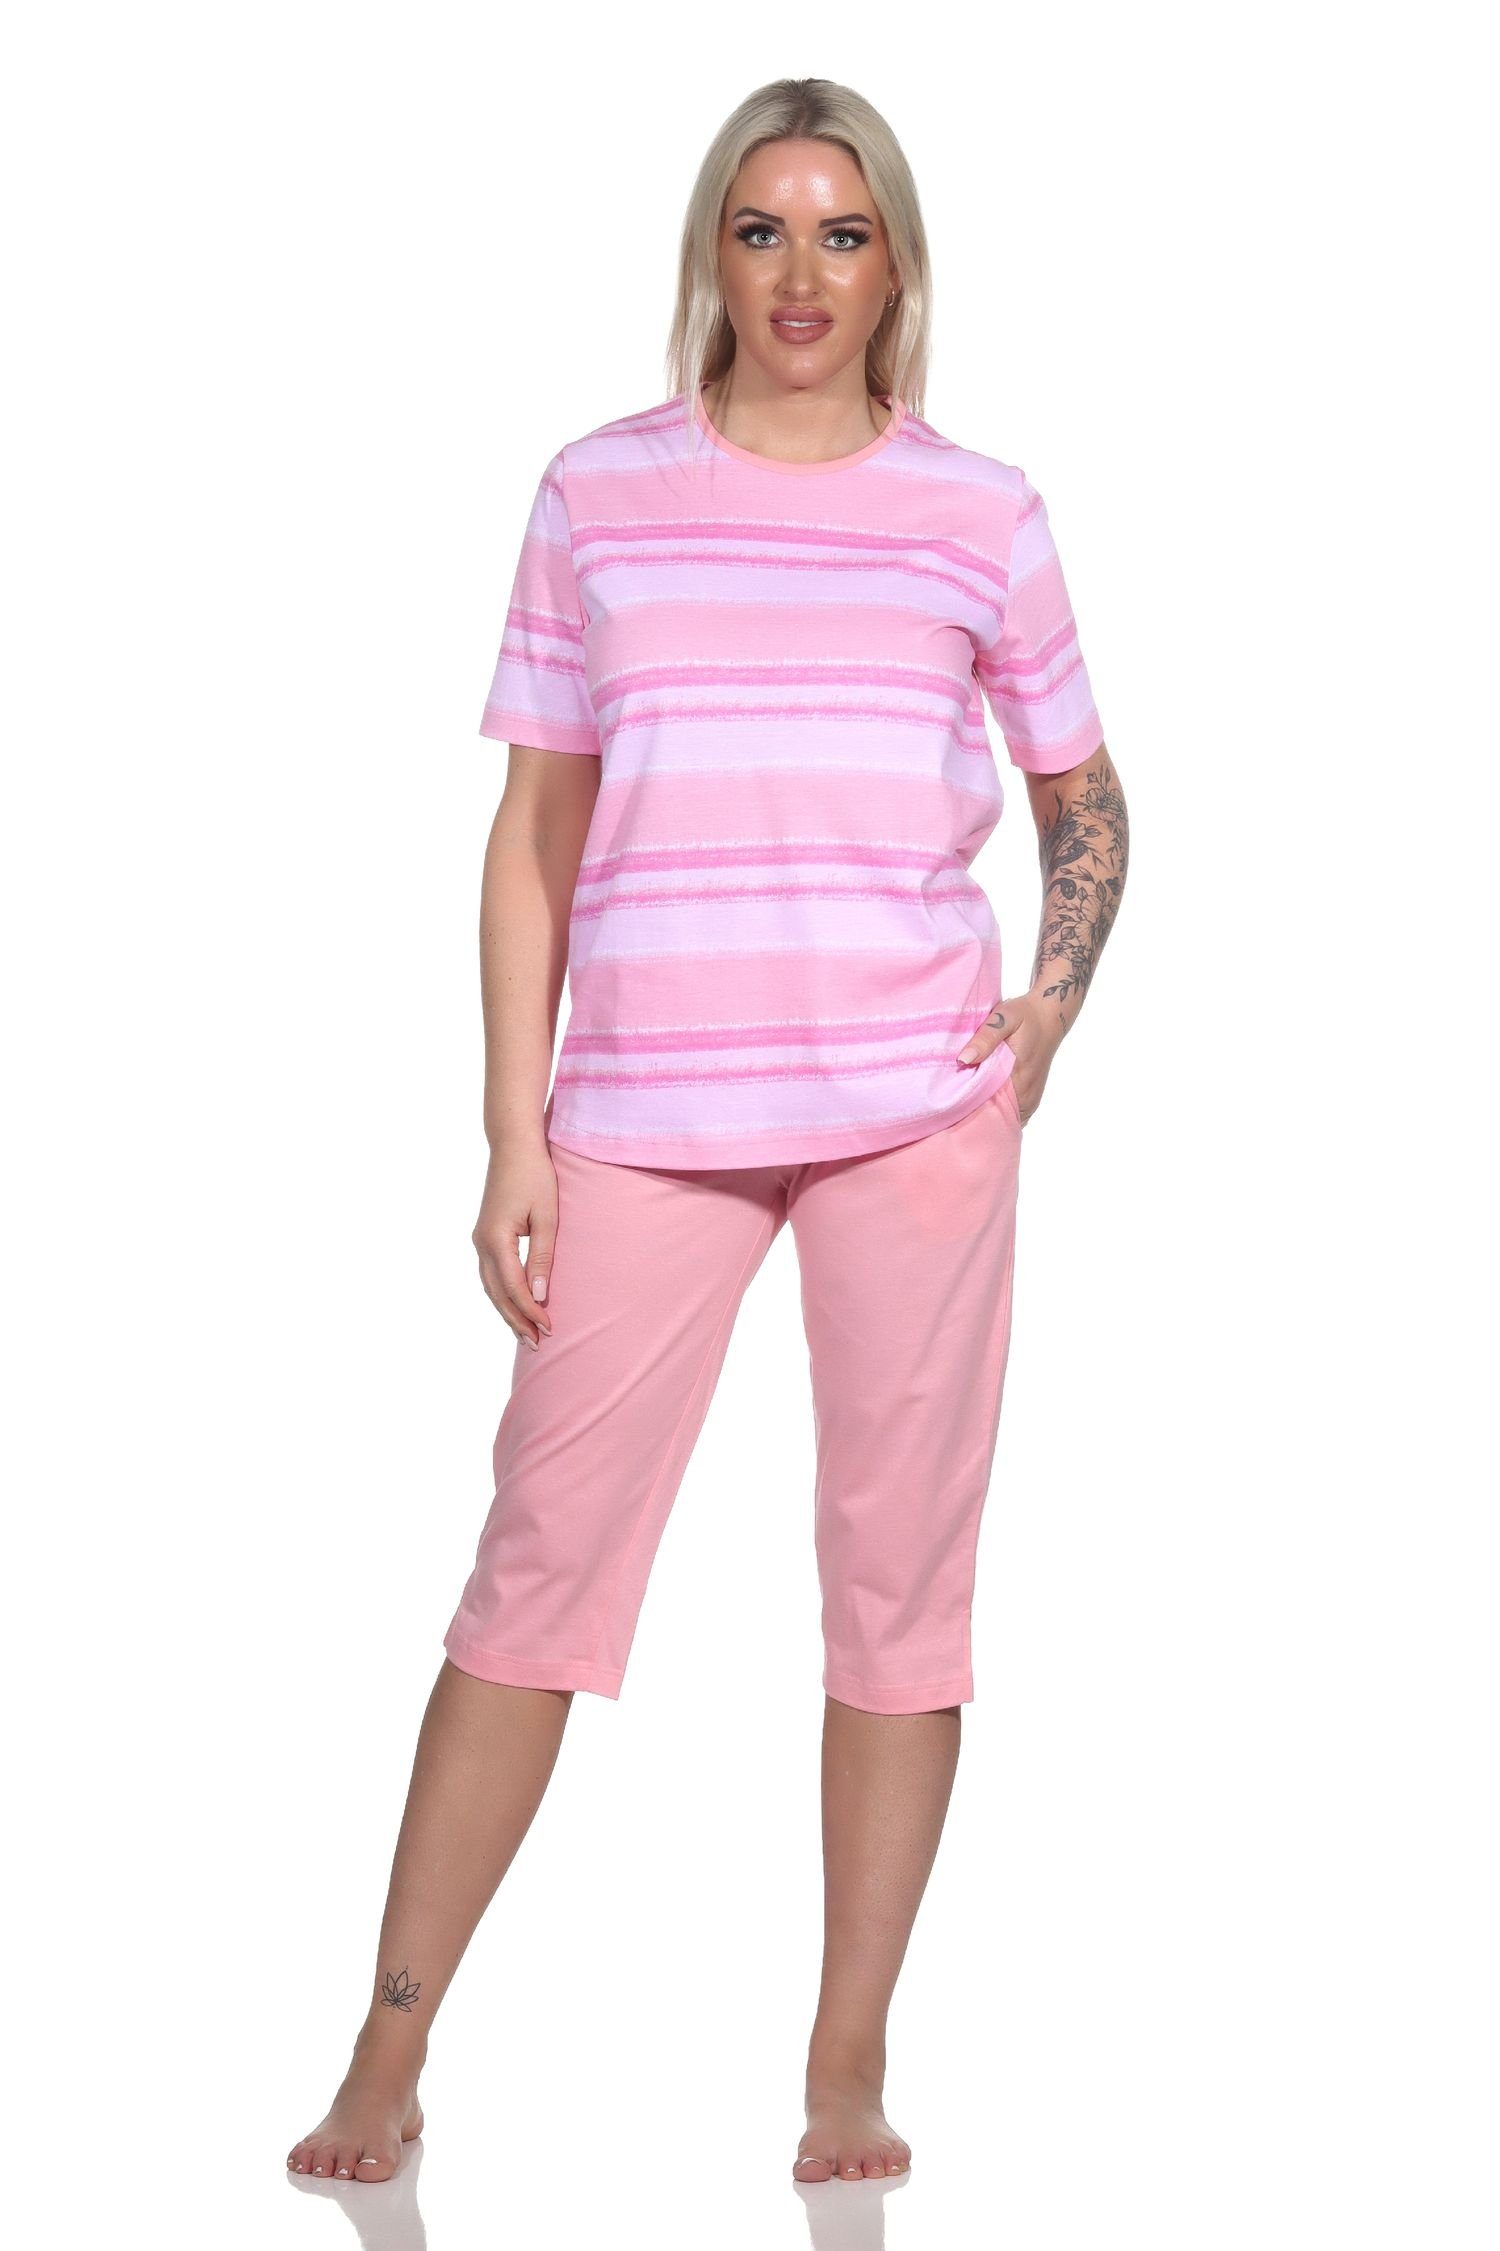 Normann Pyjama Damen Capri Schlafanzug Streifen im farbenfrohen Pyjama Look rosa kurzarm